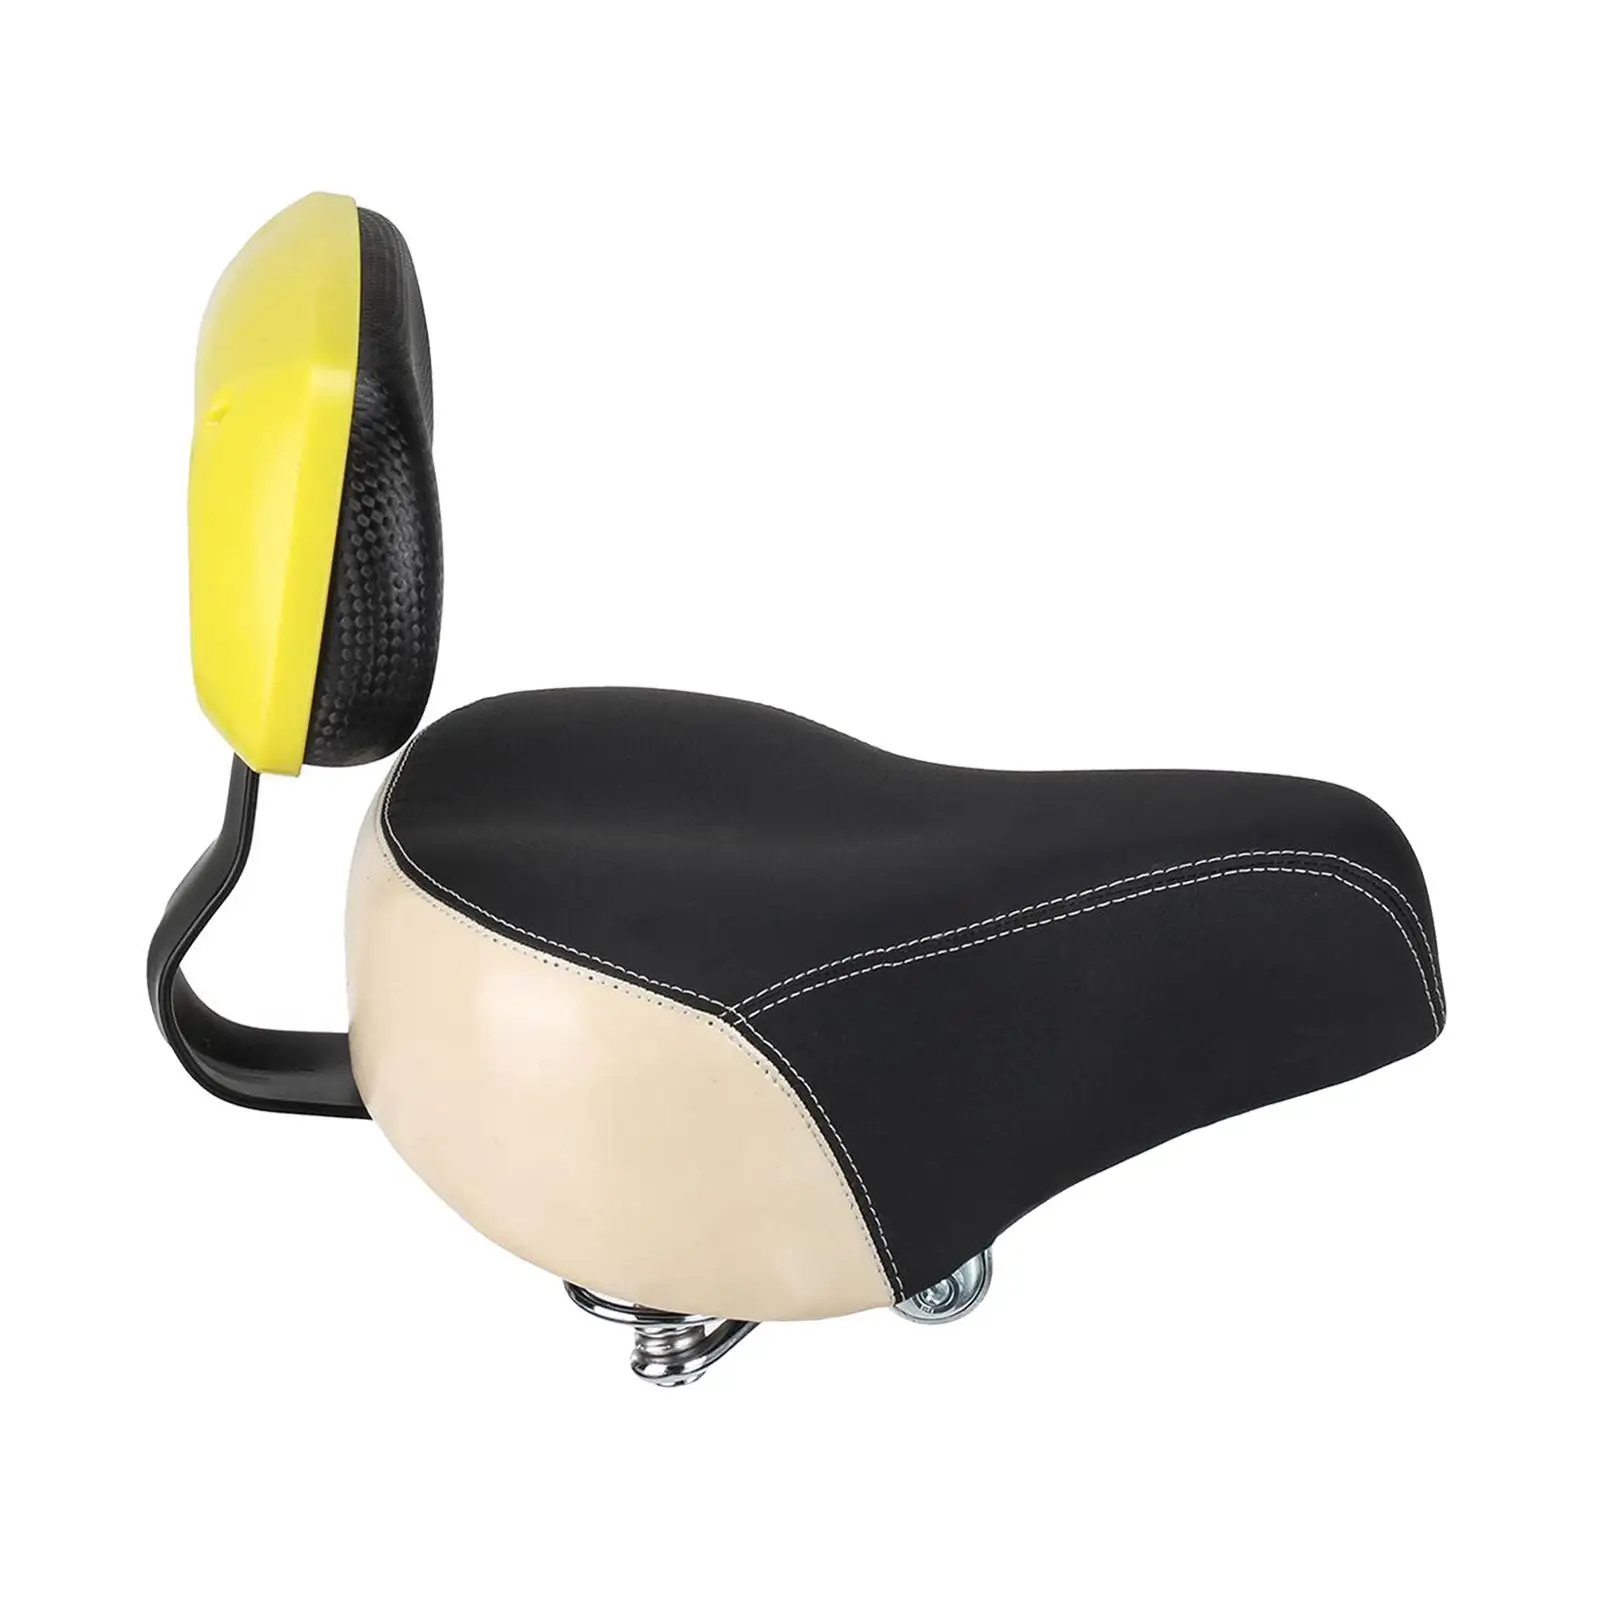  Seat Saddle Breathable  Wide   Saddle  Saddle Cushion for Exercise Bike Seat for Bike Indoor Men